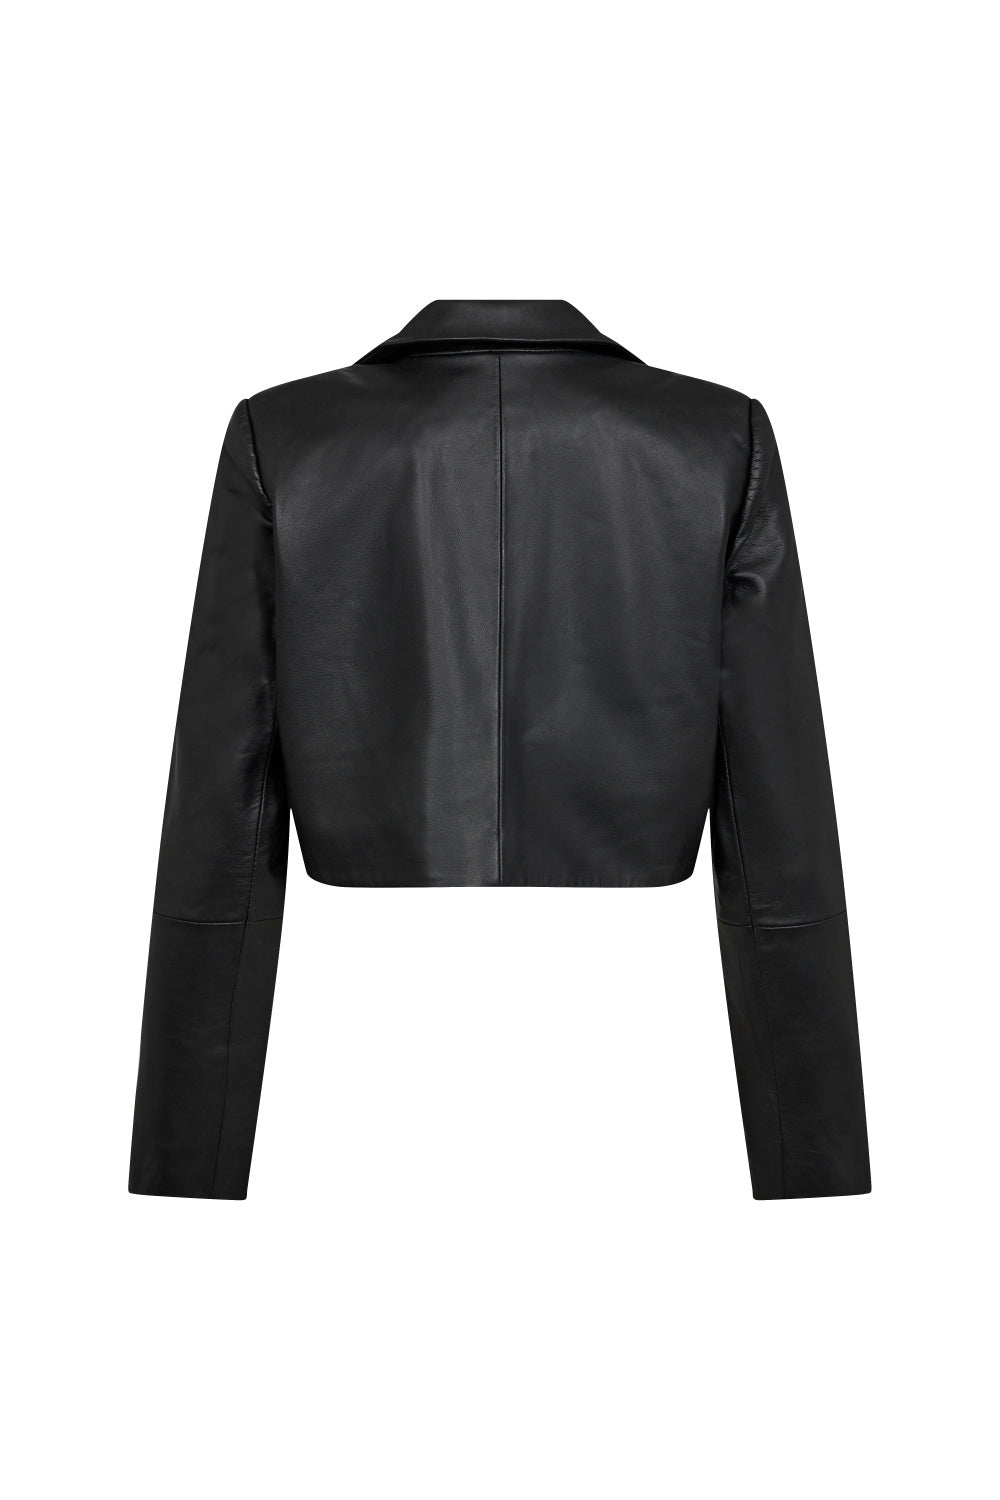 Co'Couture Phoebe Leather Crop Blazer - Black - RUM Amsterdam